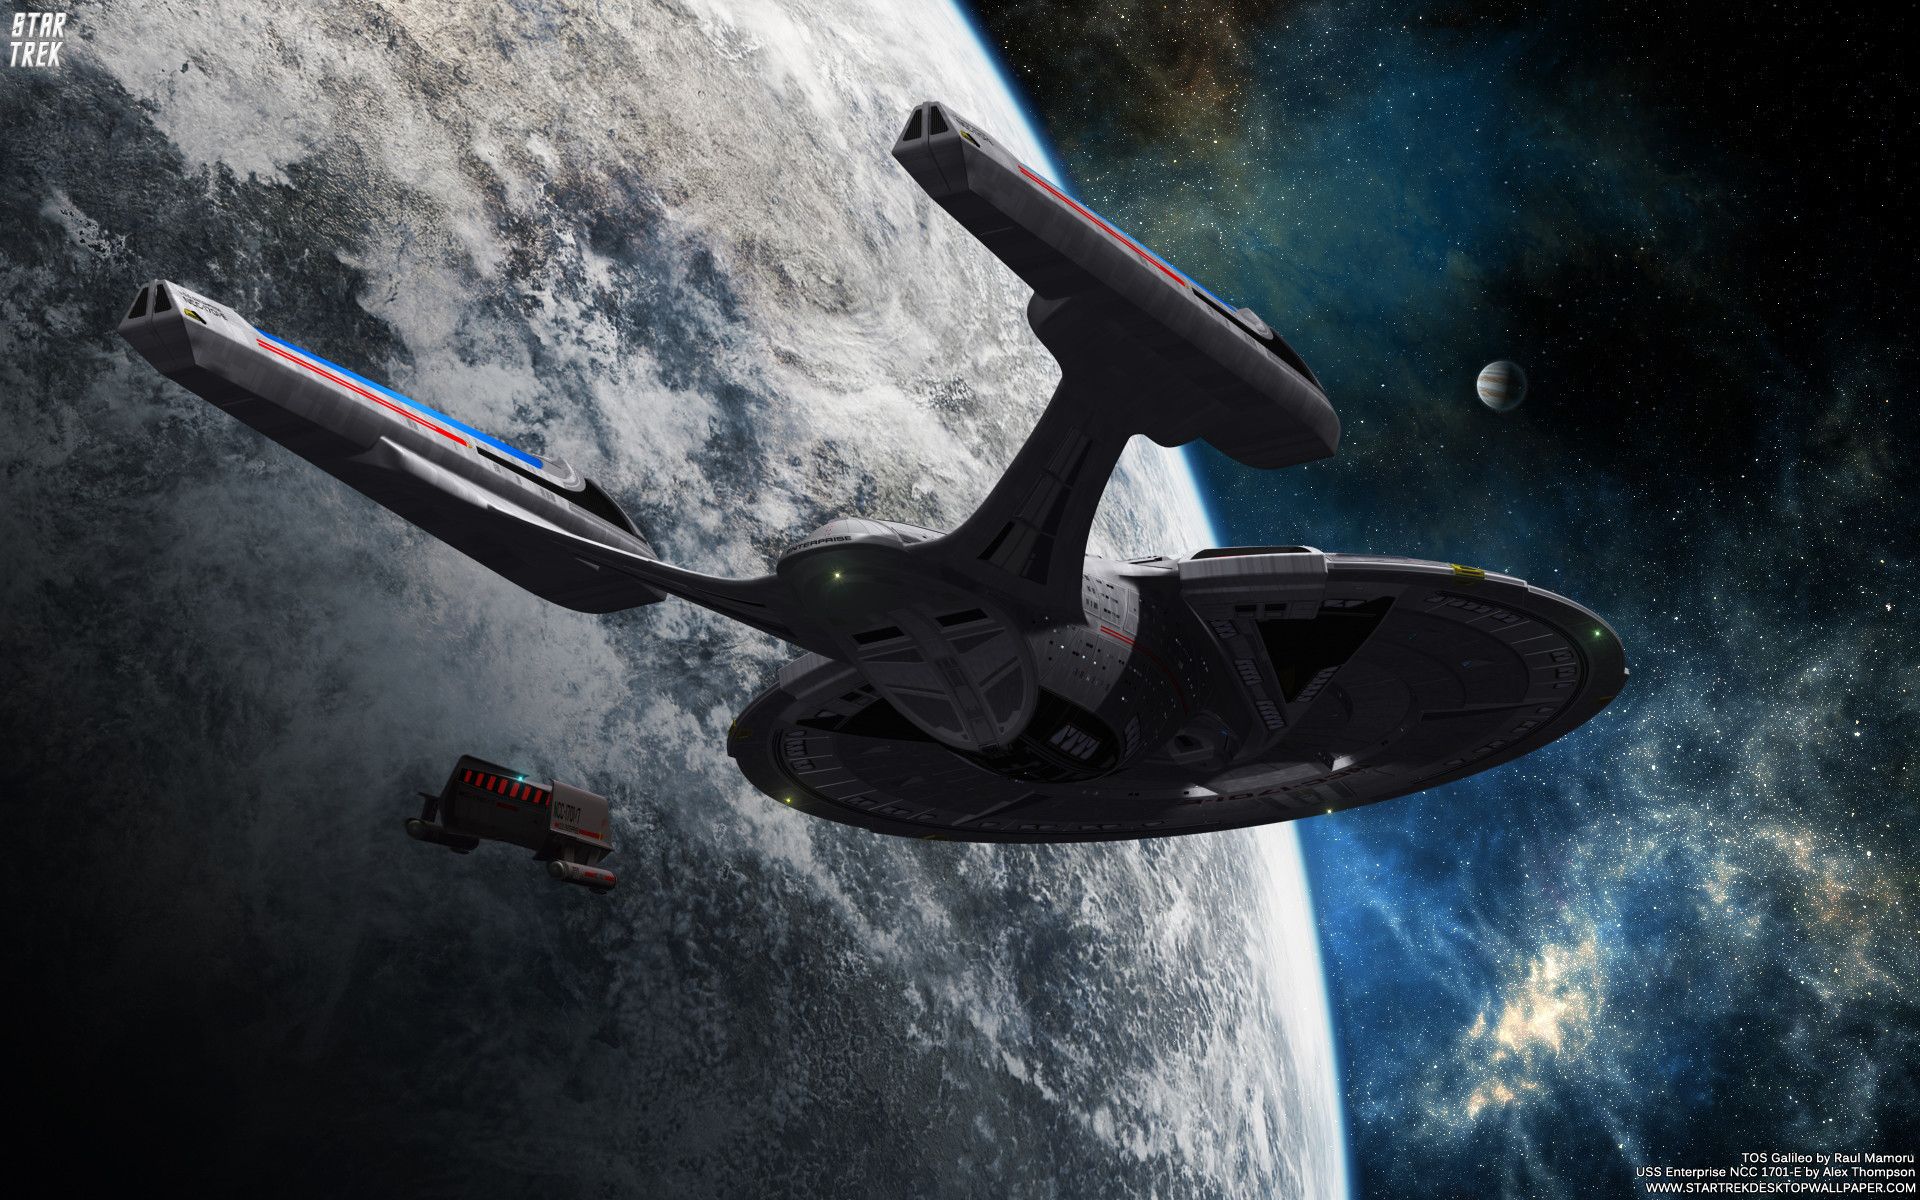 Star Trek Uss Enterprise Ncc 1701 E Enterprise 1701 E In Star Trek Into Darkness HD Wallpaper